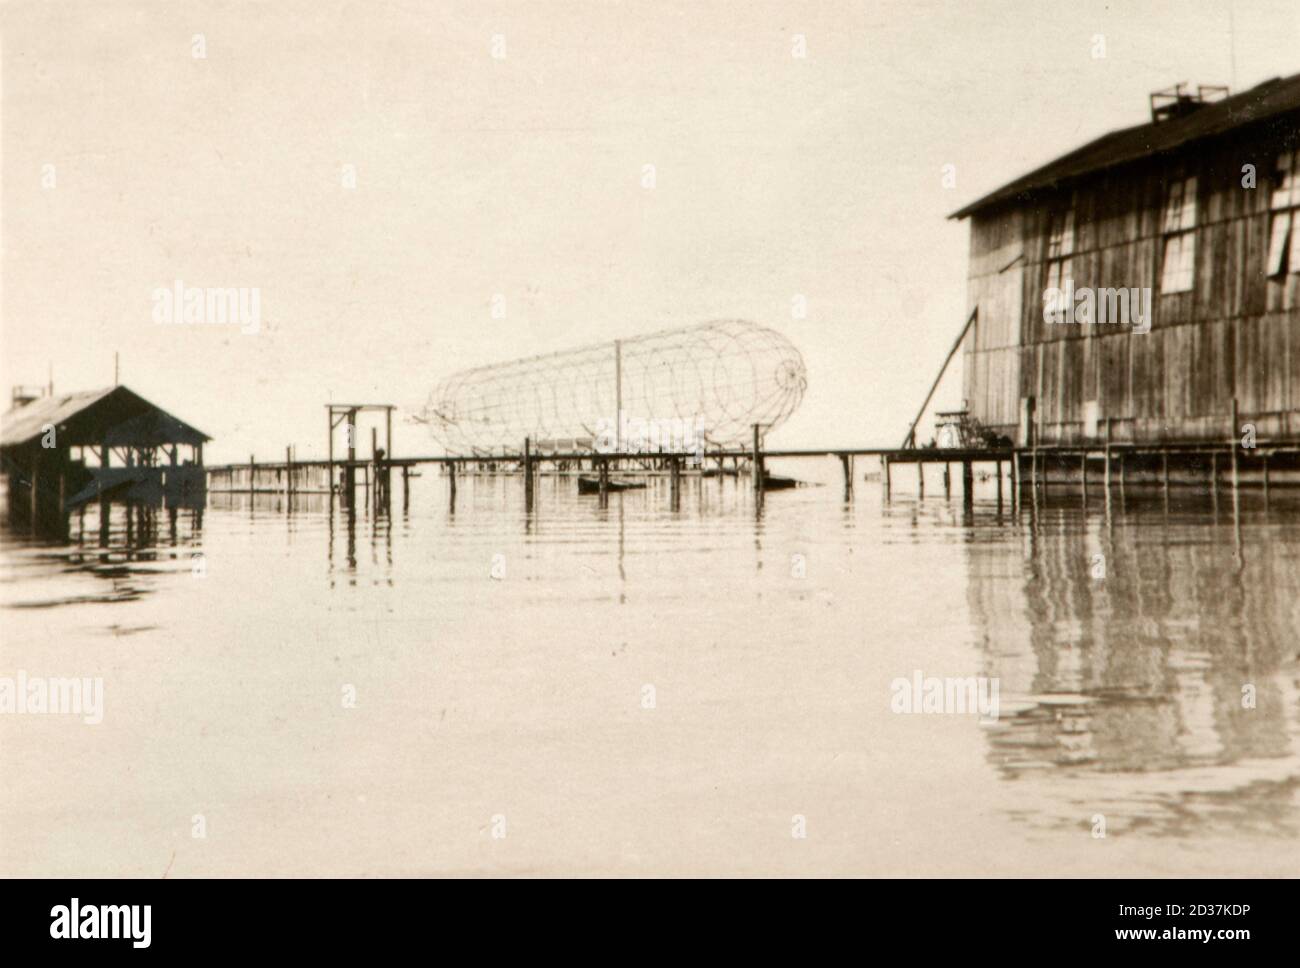 Zeppelin LZ 6 under construction, Germany, 1909 Stock Photo